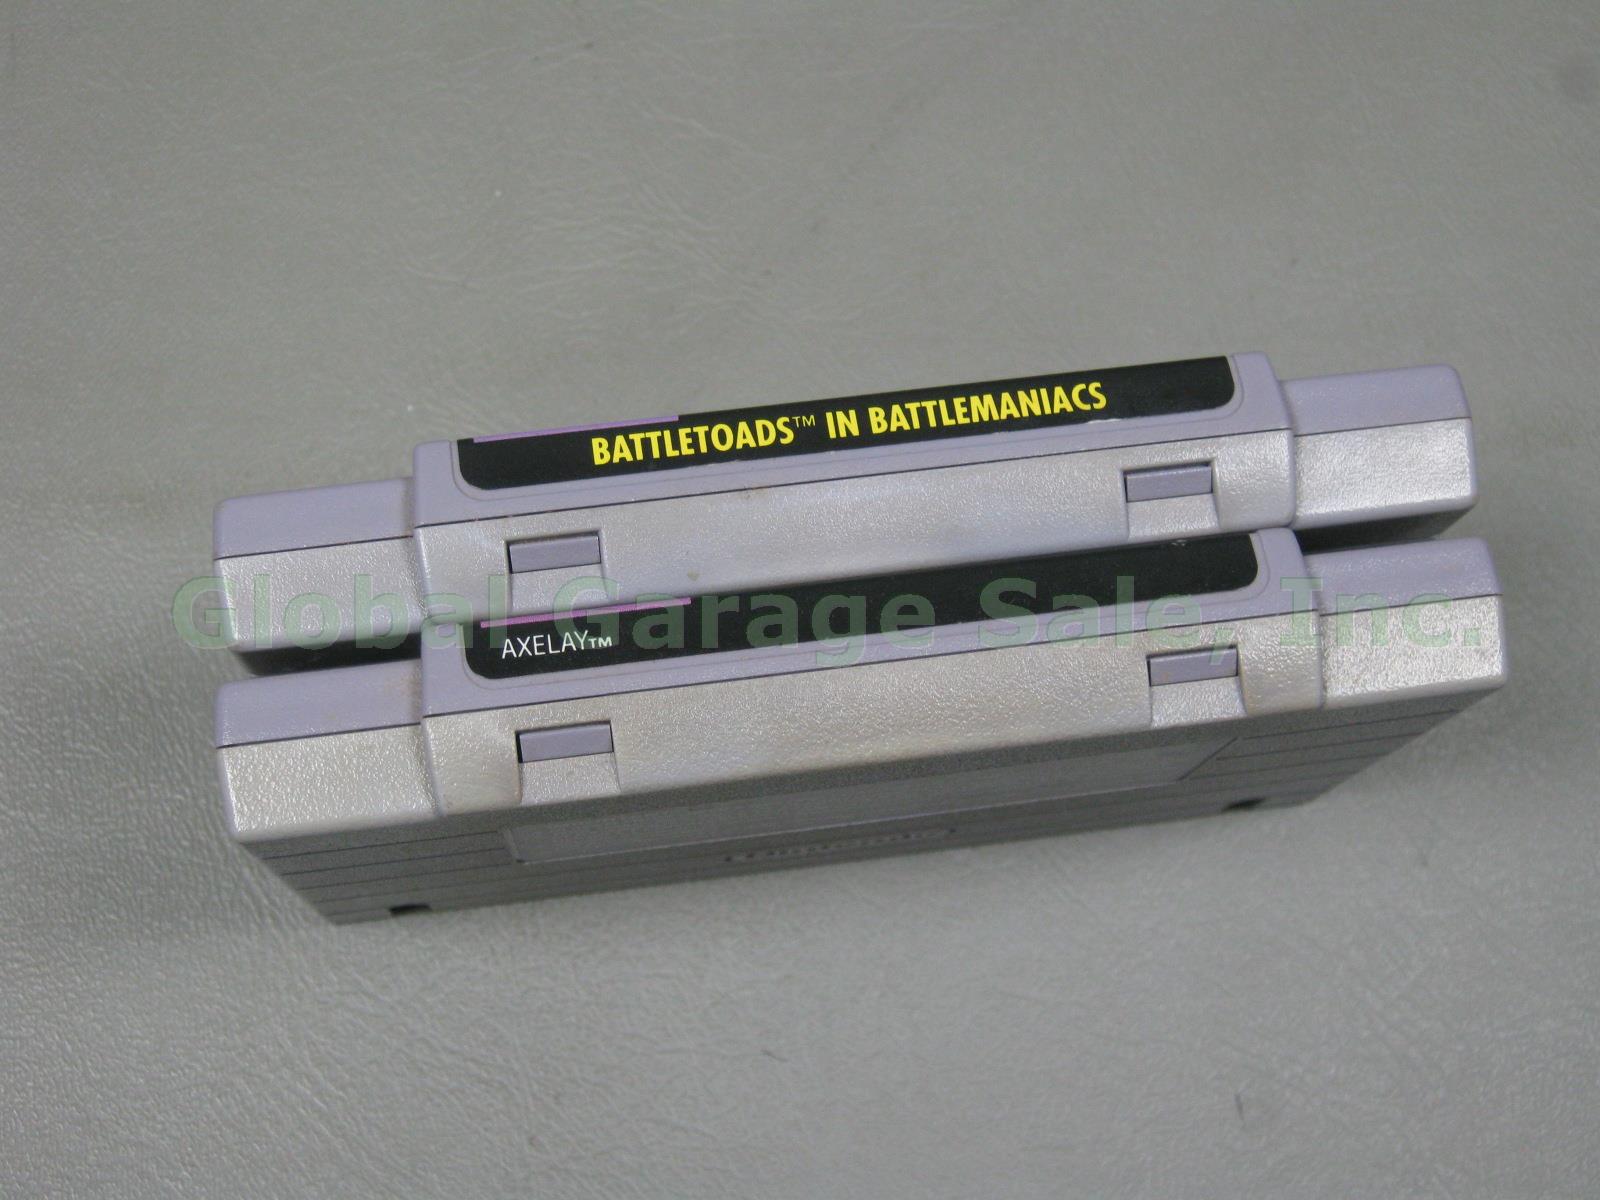 2 Super Nintendo SNES Game Cart Lot Battletoads In Battlemaniacs Axelay + Manual 5